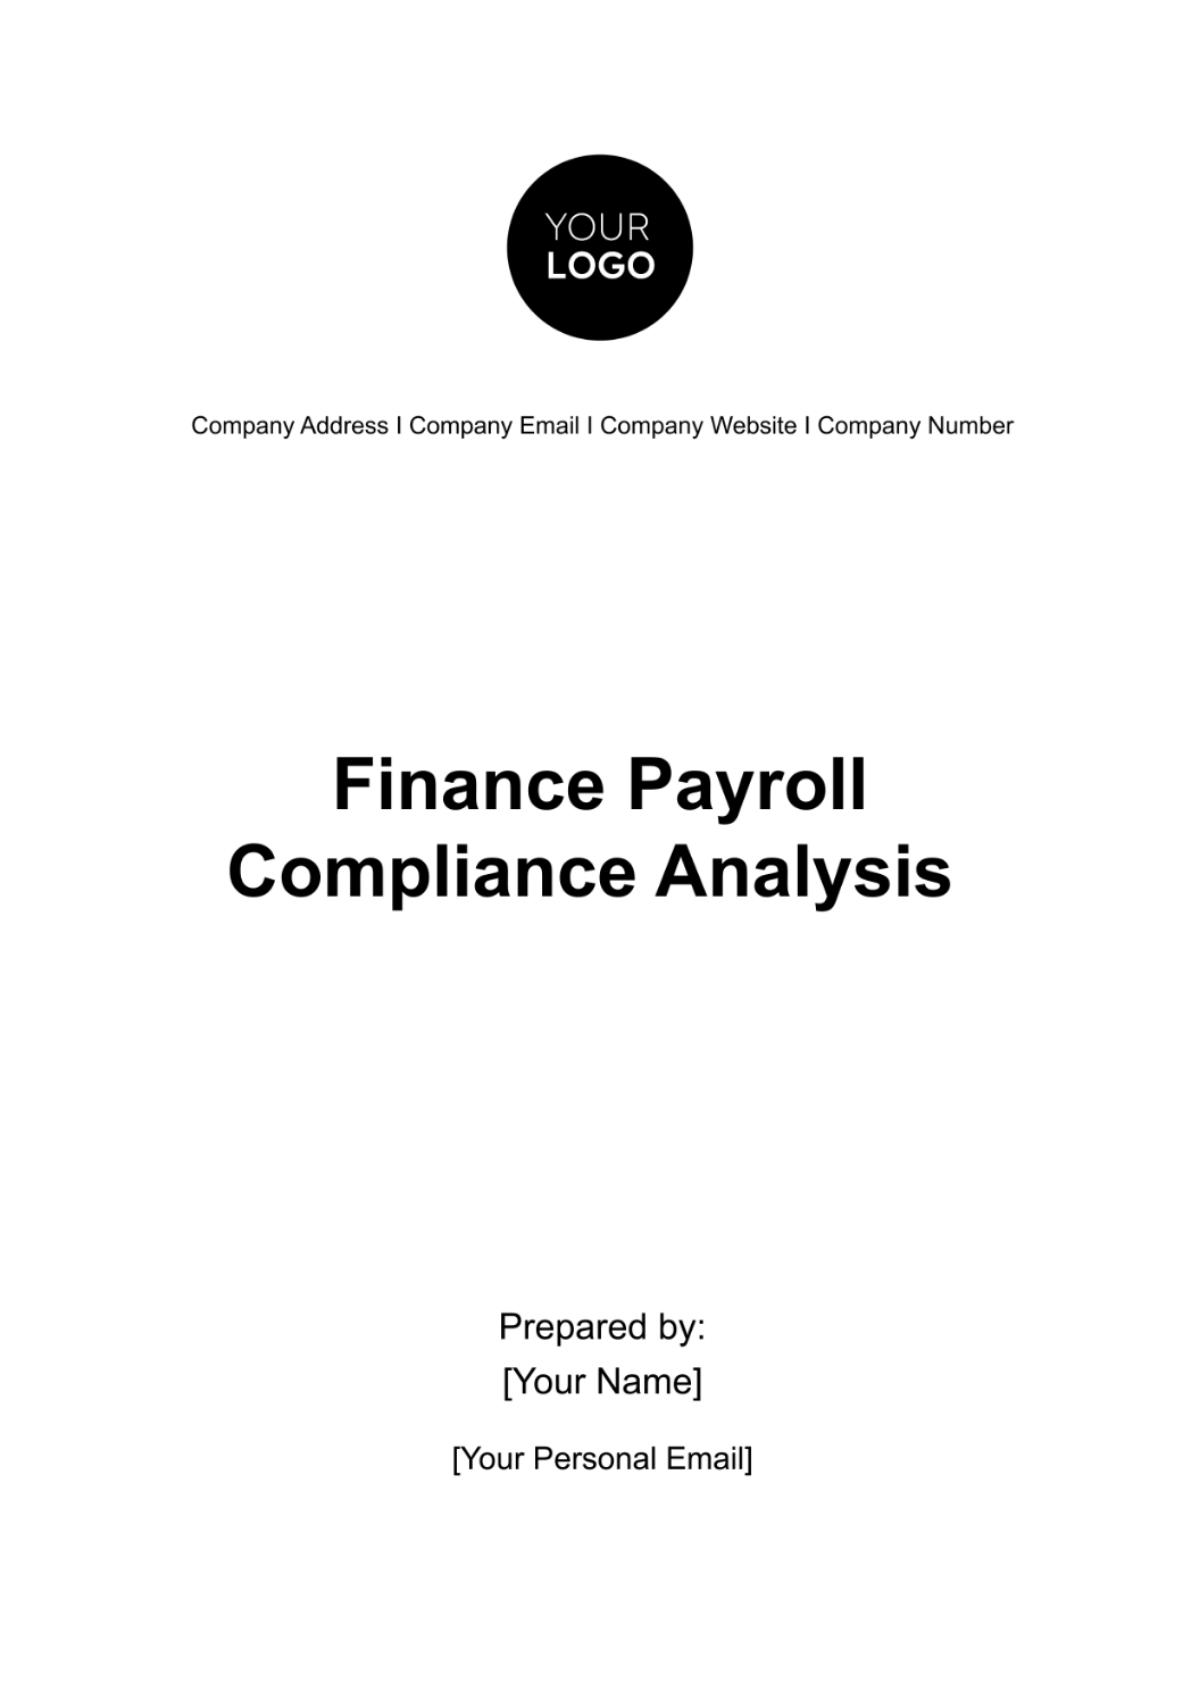 Finance Payroll Compliance Analysis Template